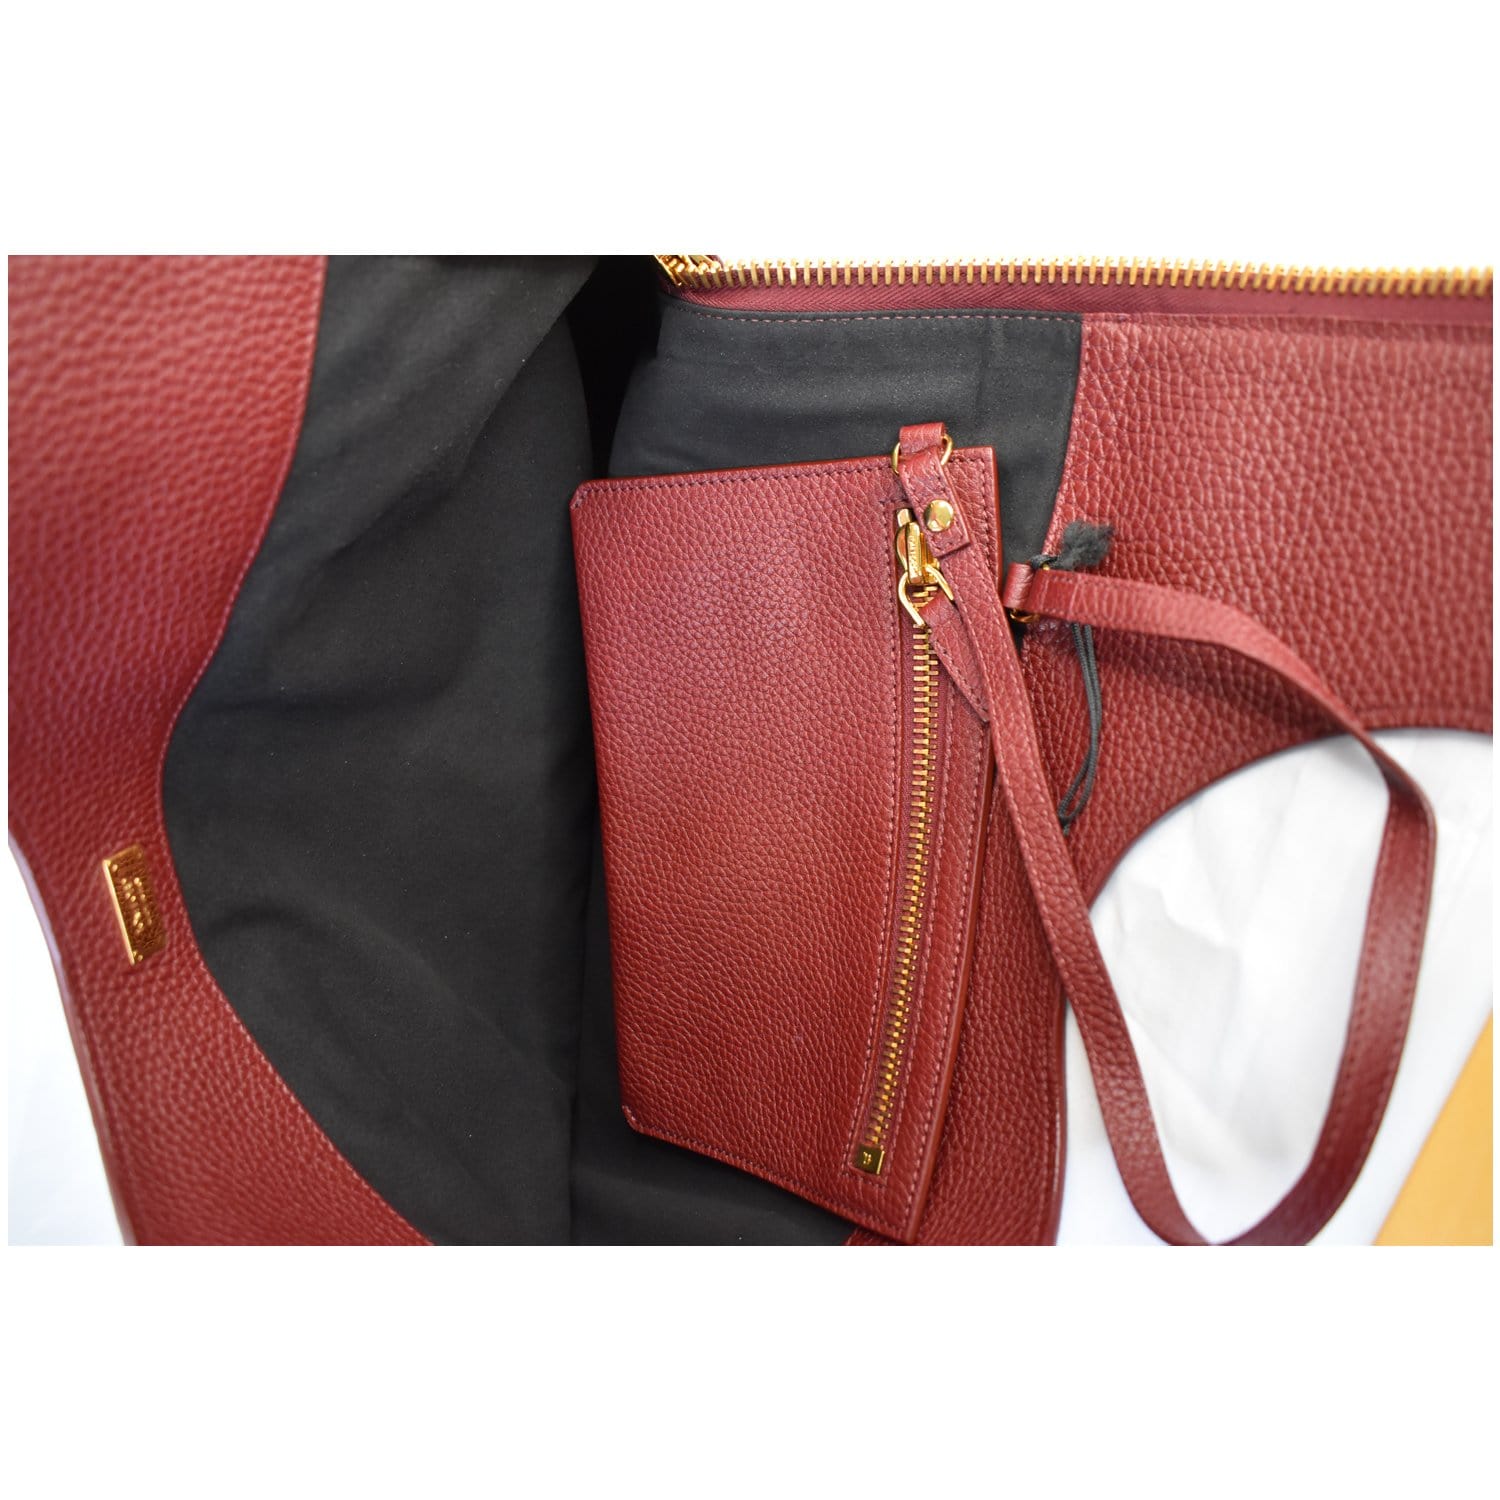 Tom Ford 'Alix' Small Fold Bag